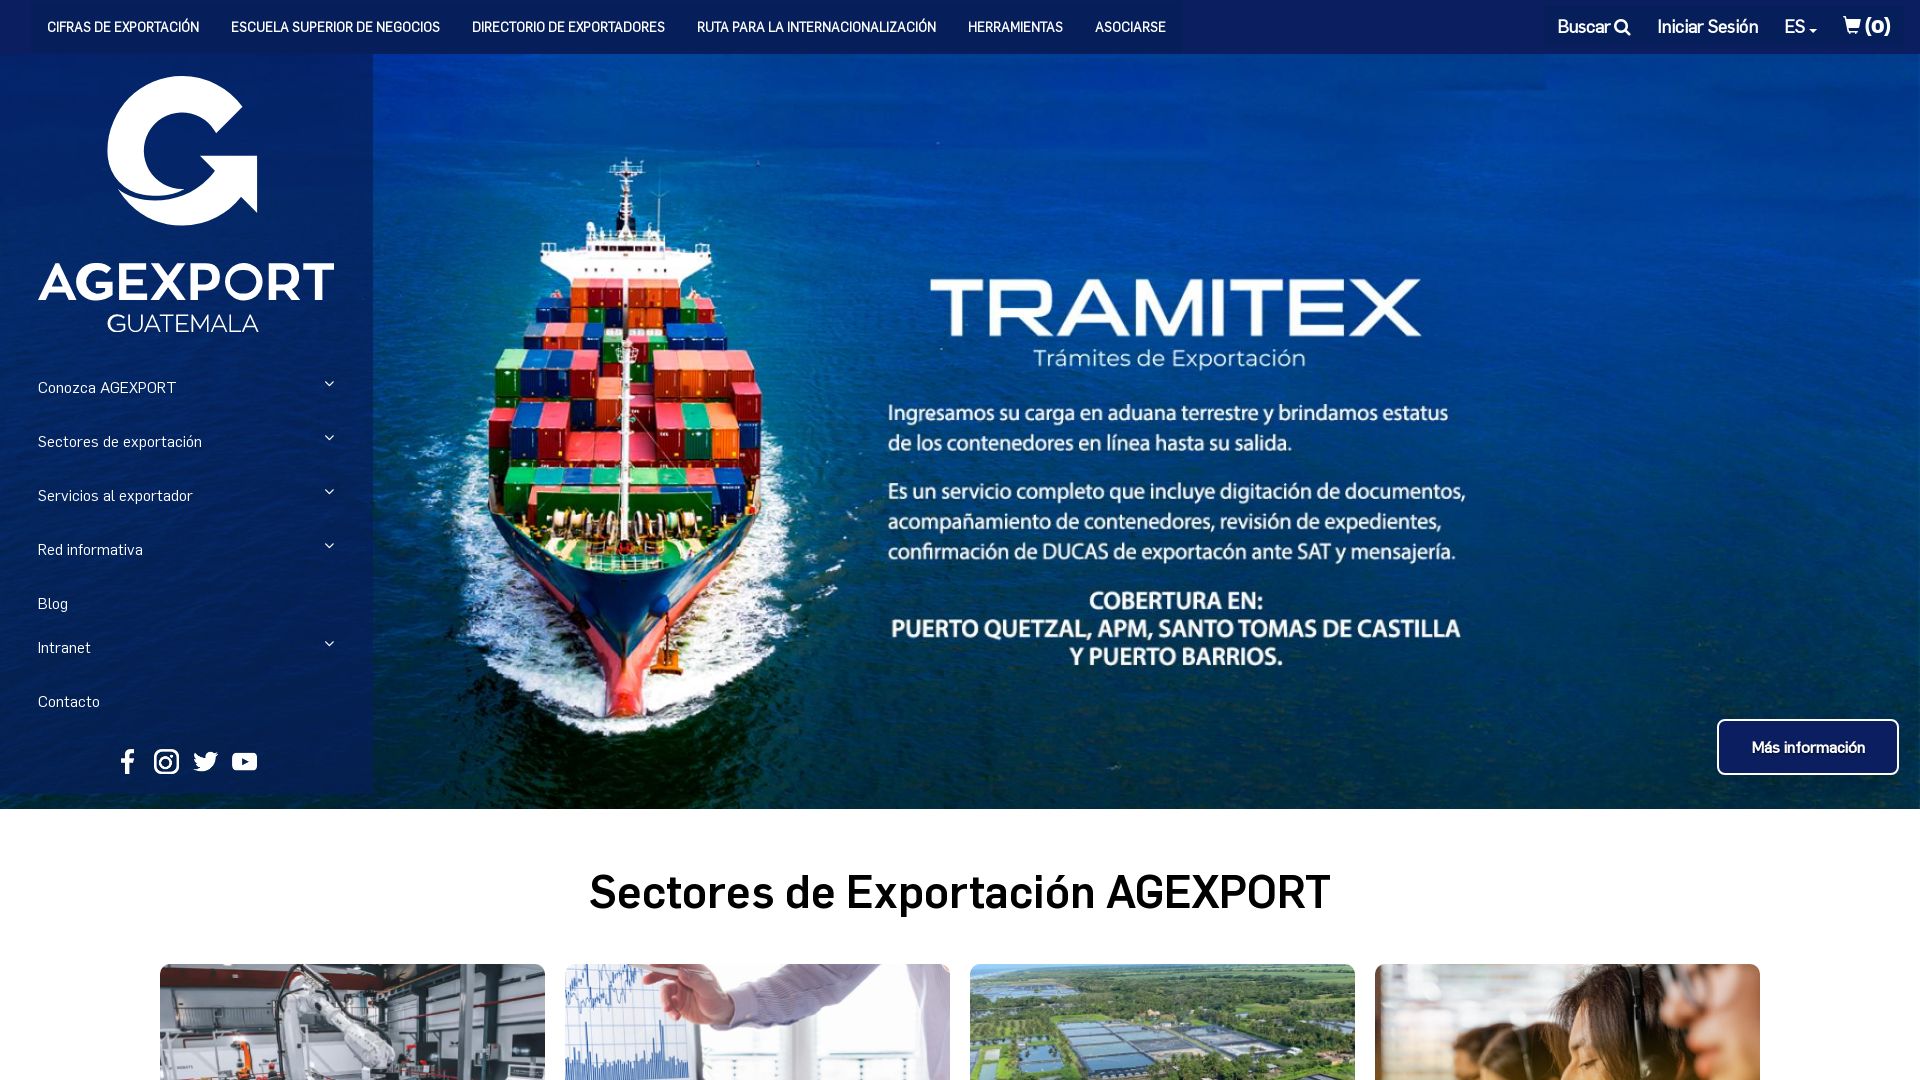 Estado web export.com.gt está   ONLINE